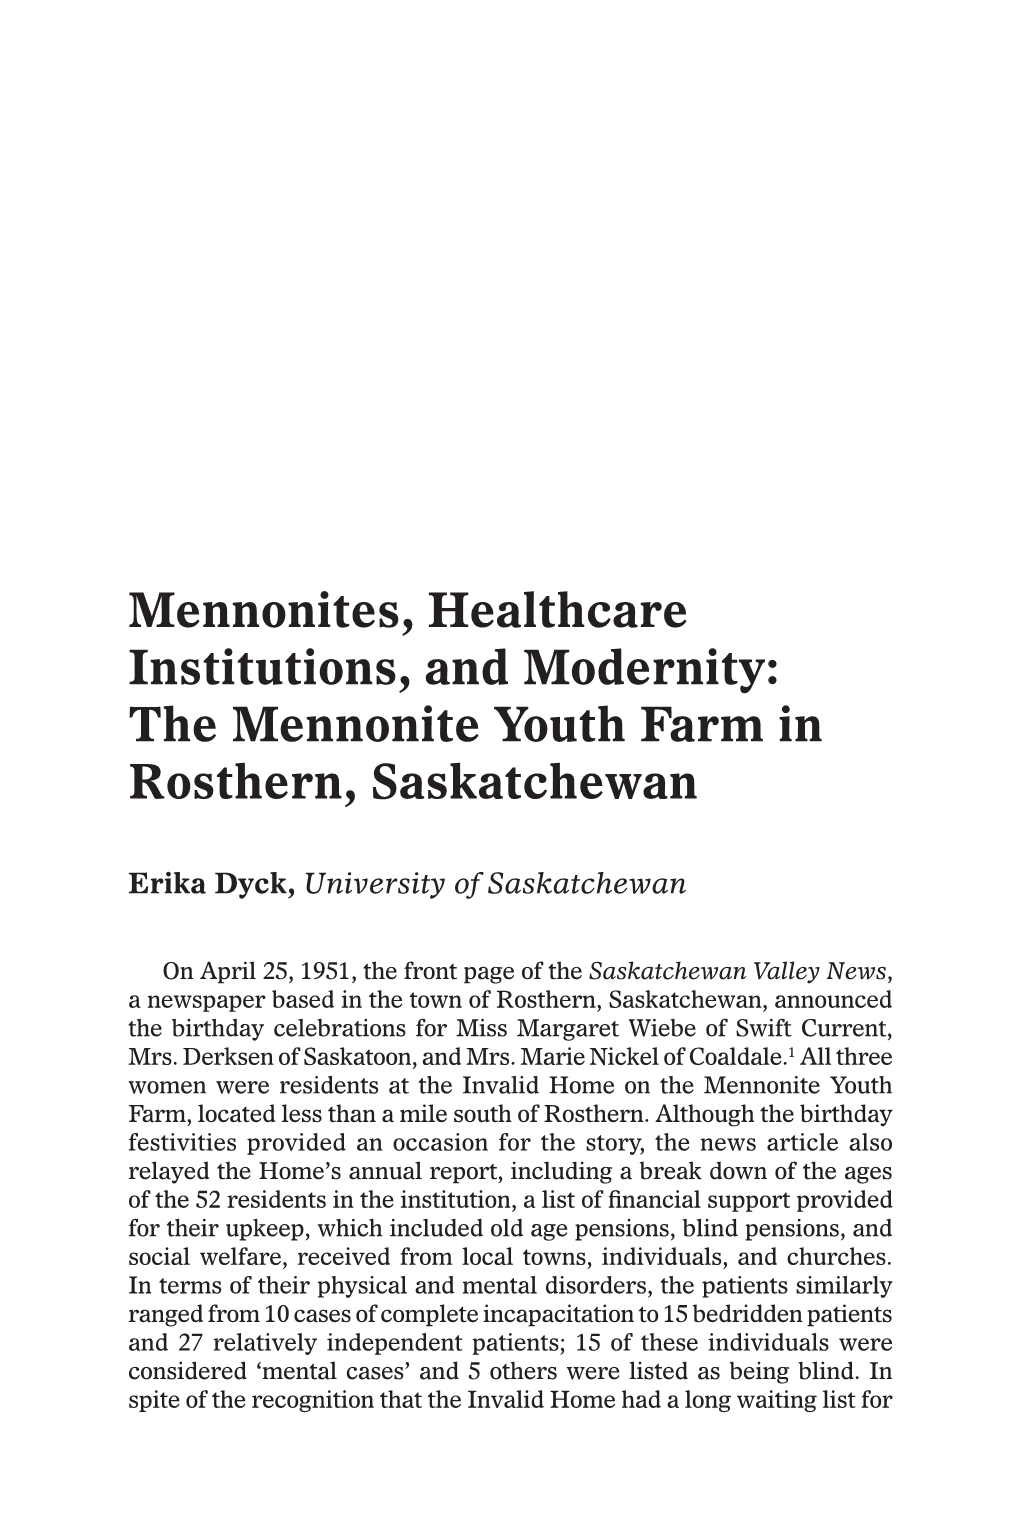 The Mennonite Youth Farm in Rosthern, Saskatchewan